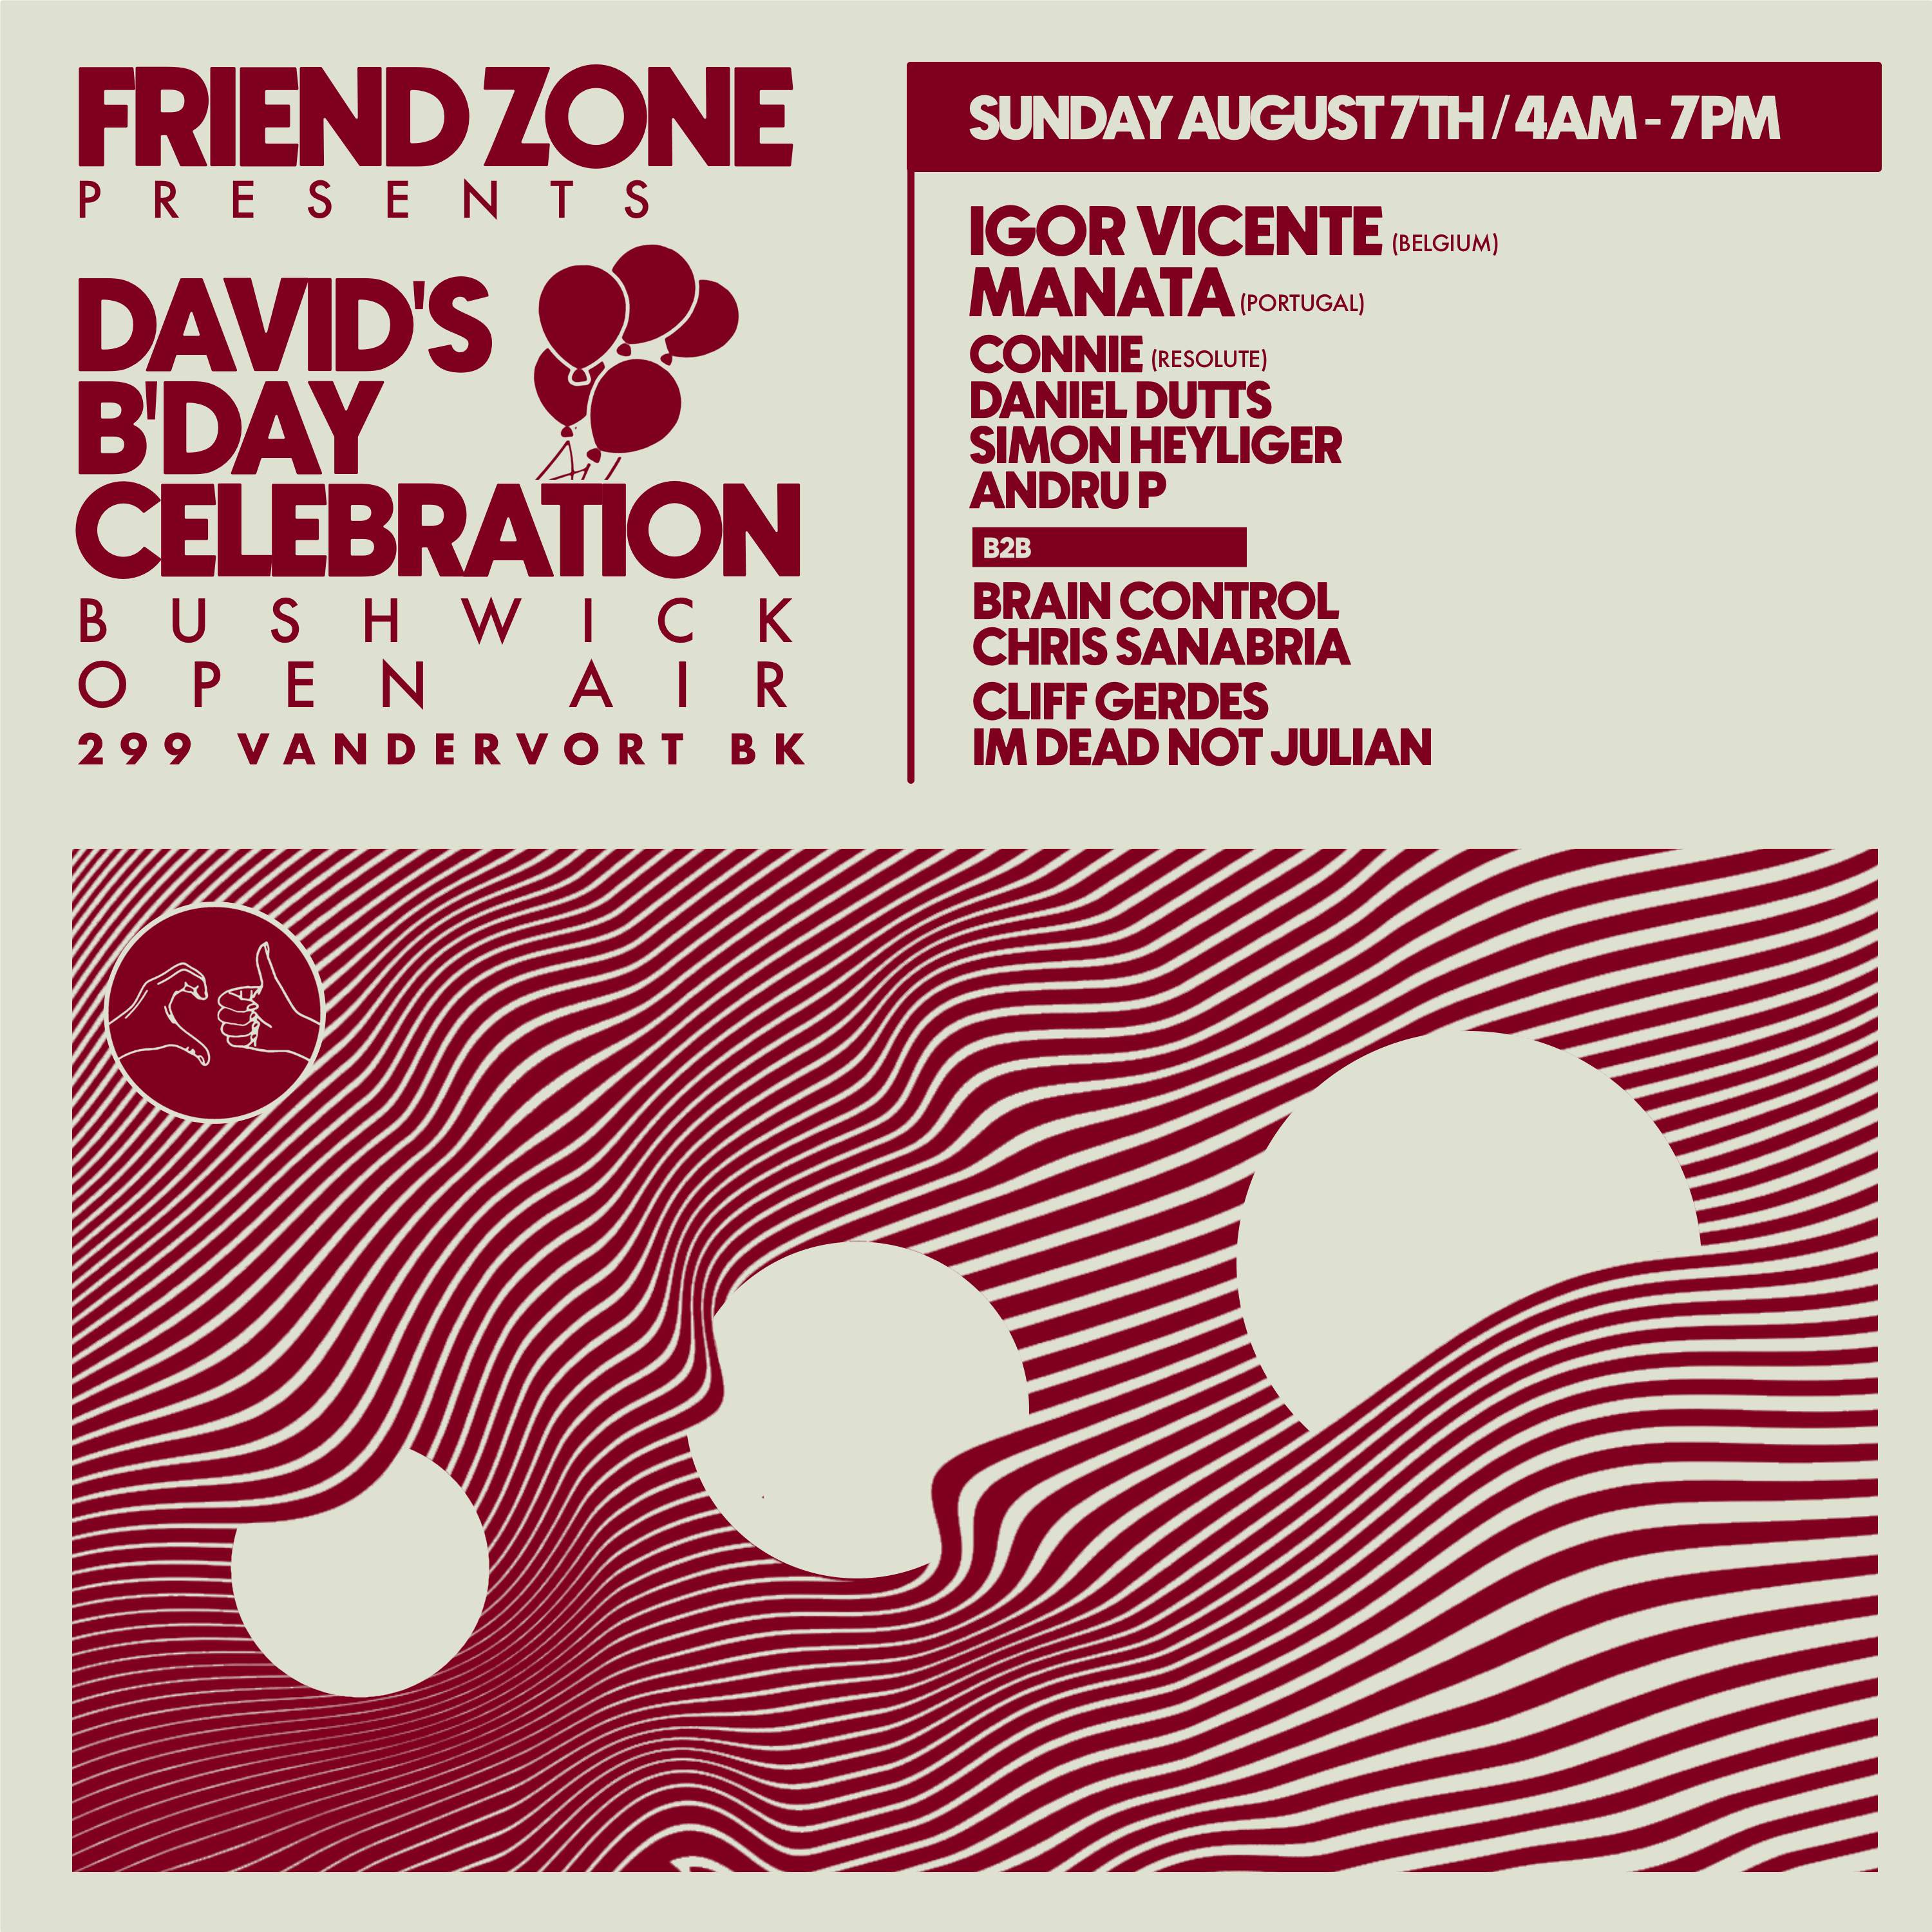 FriendZone present's open Air David's Bday celebration - Página frontal